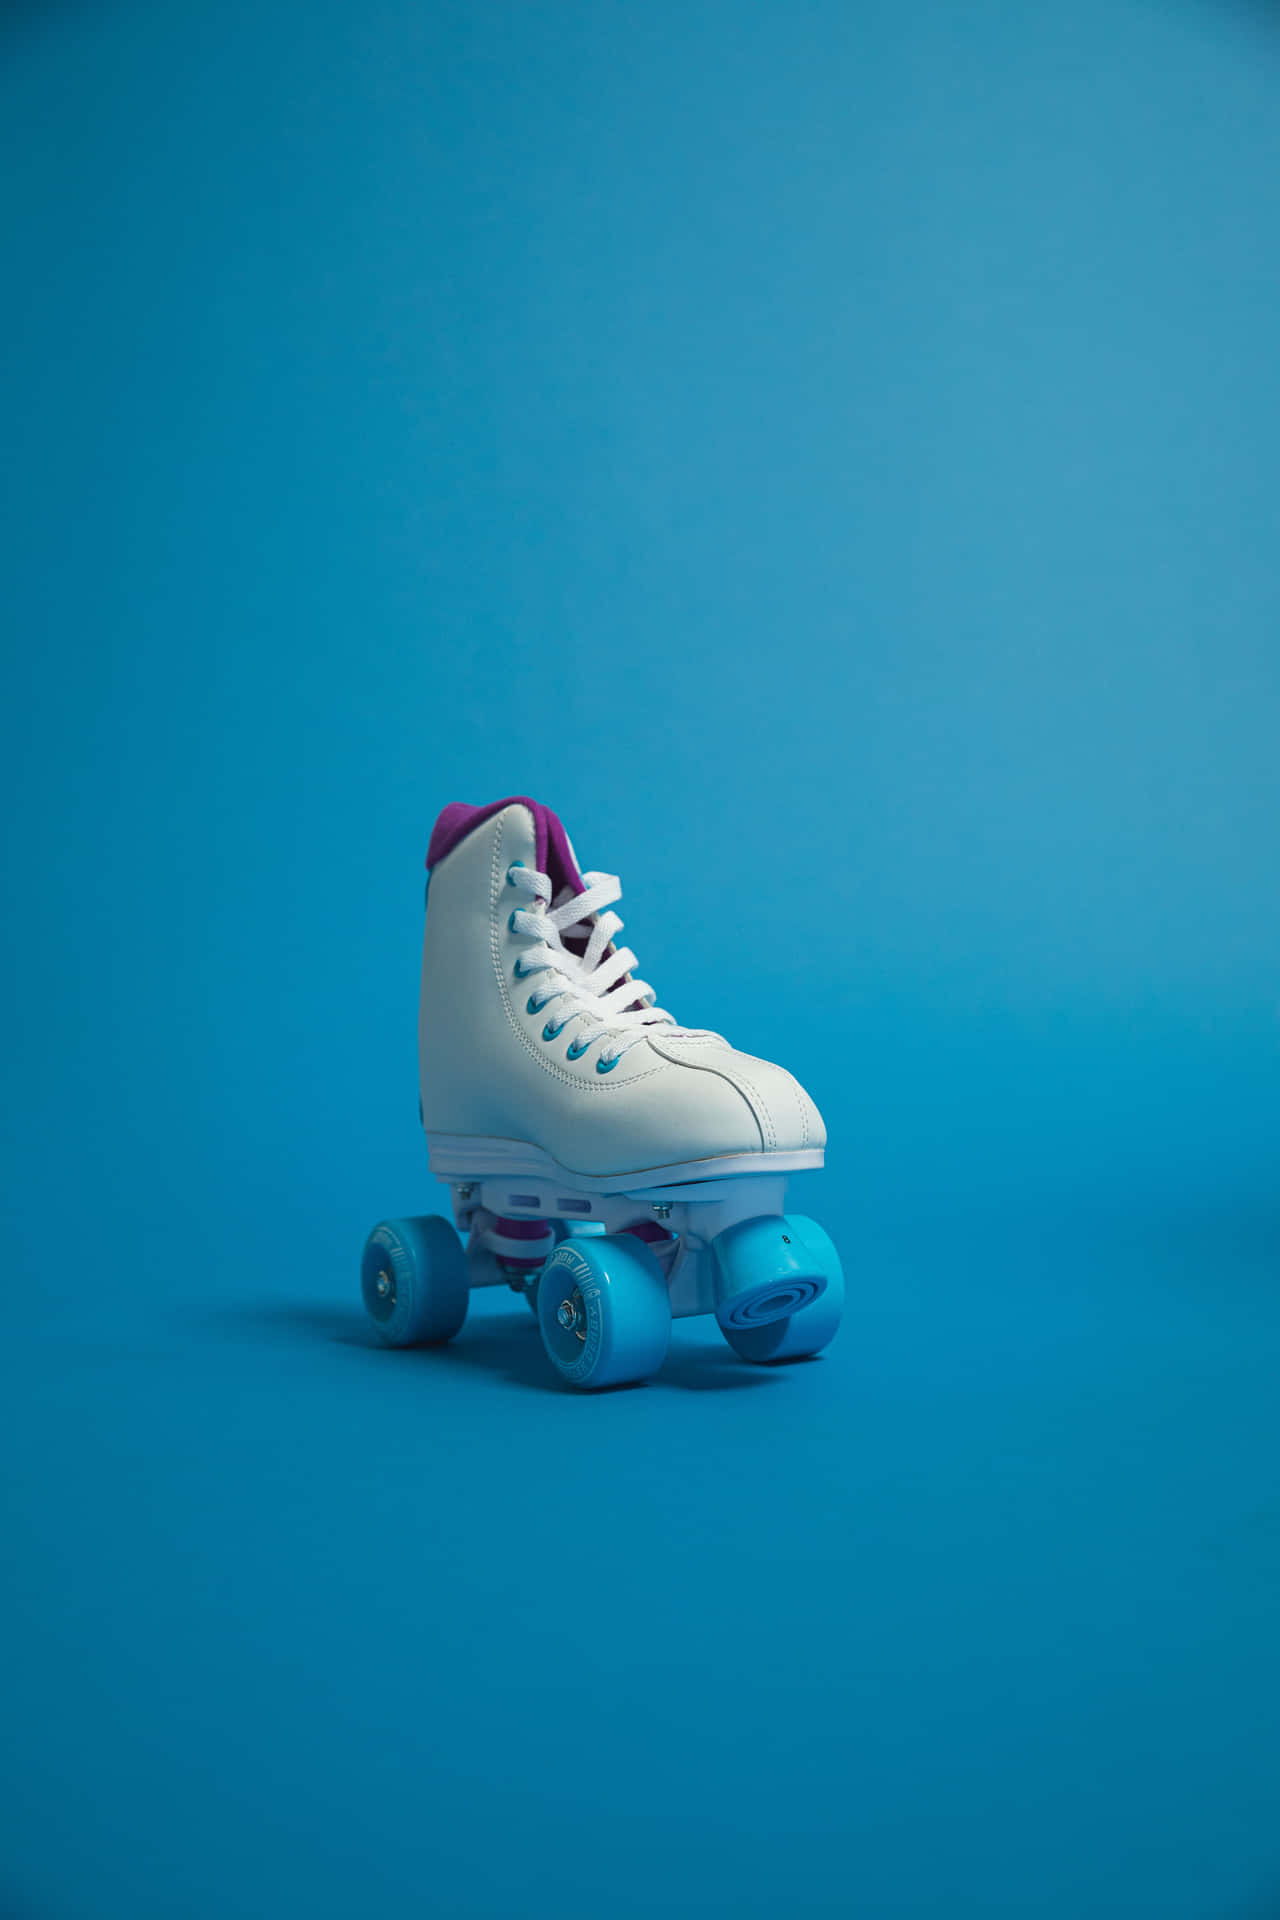 Skating Shoes Blue aesthetic Background